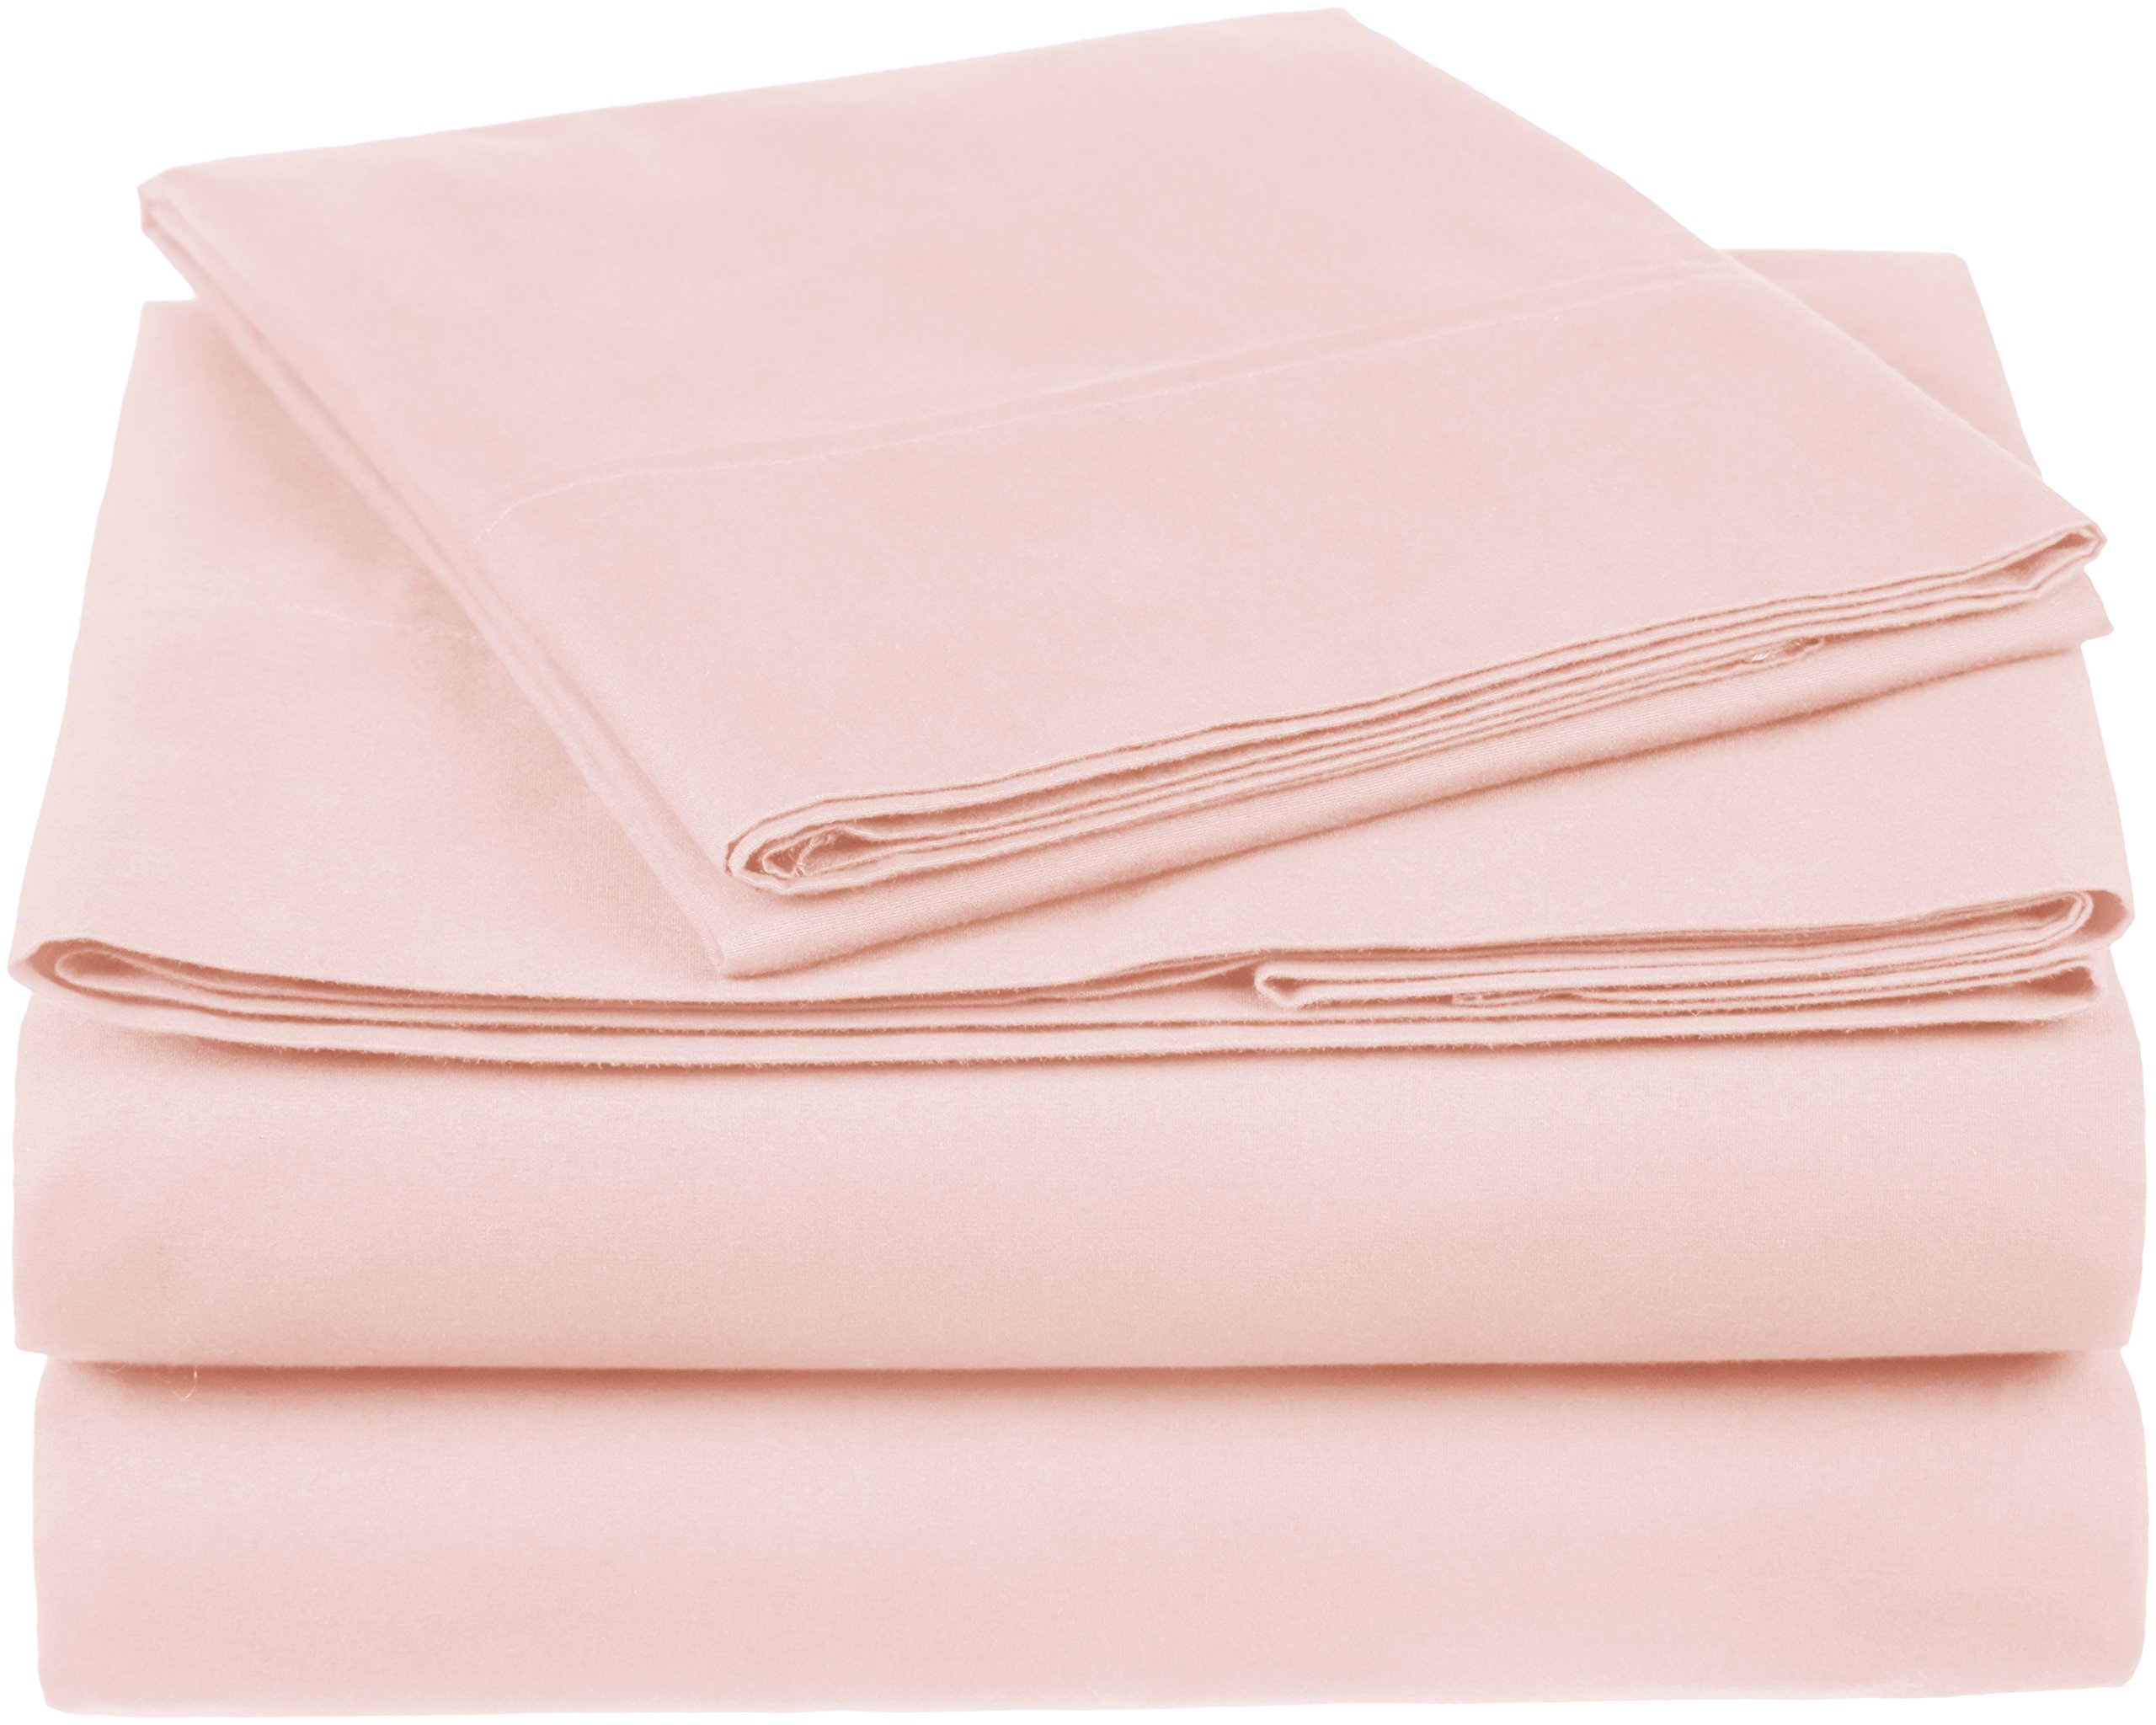 Book Cover Pinzon 300 Thread Count Organic Cotton Bed Sheet Set - Twin XL, Blush Pink